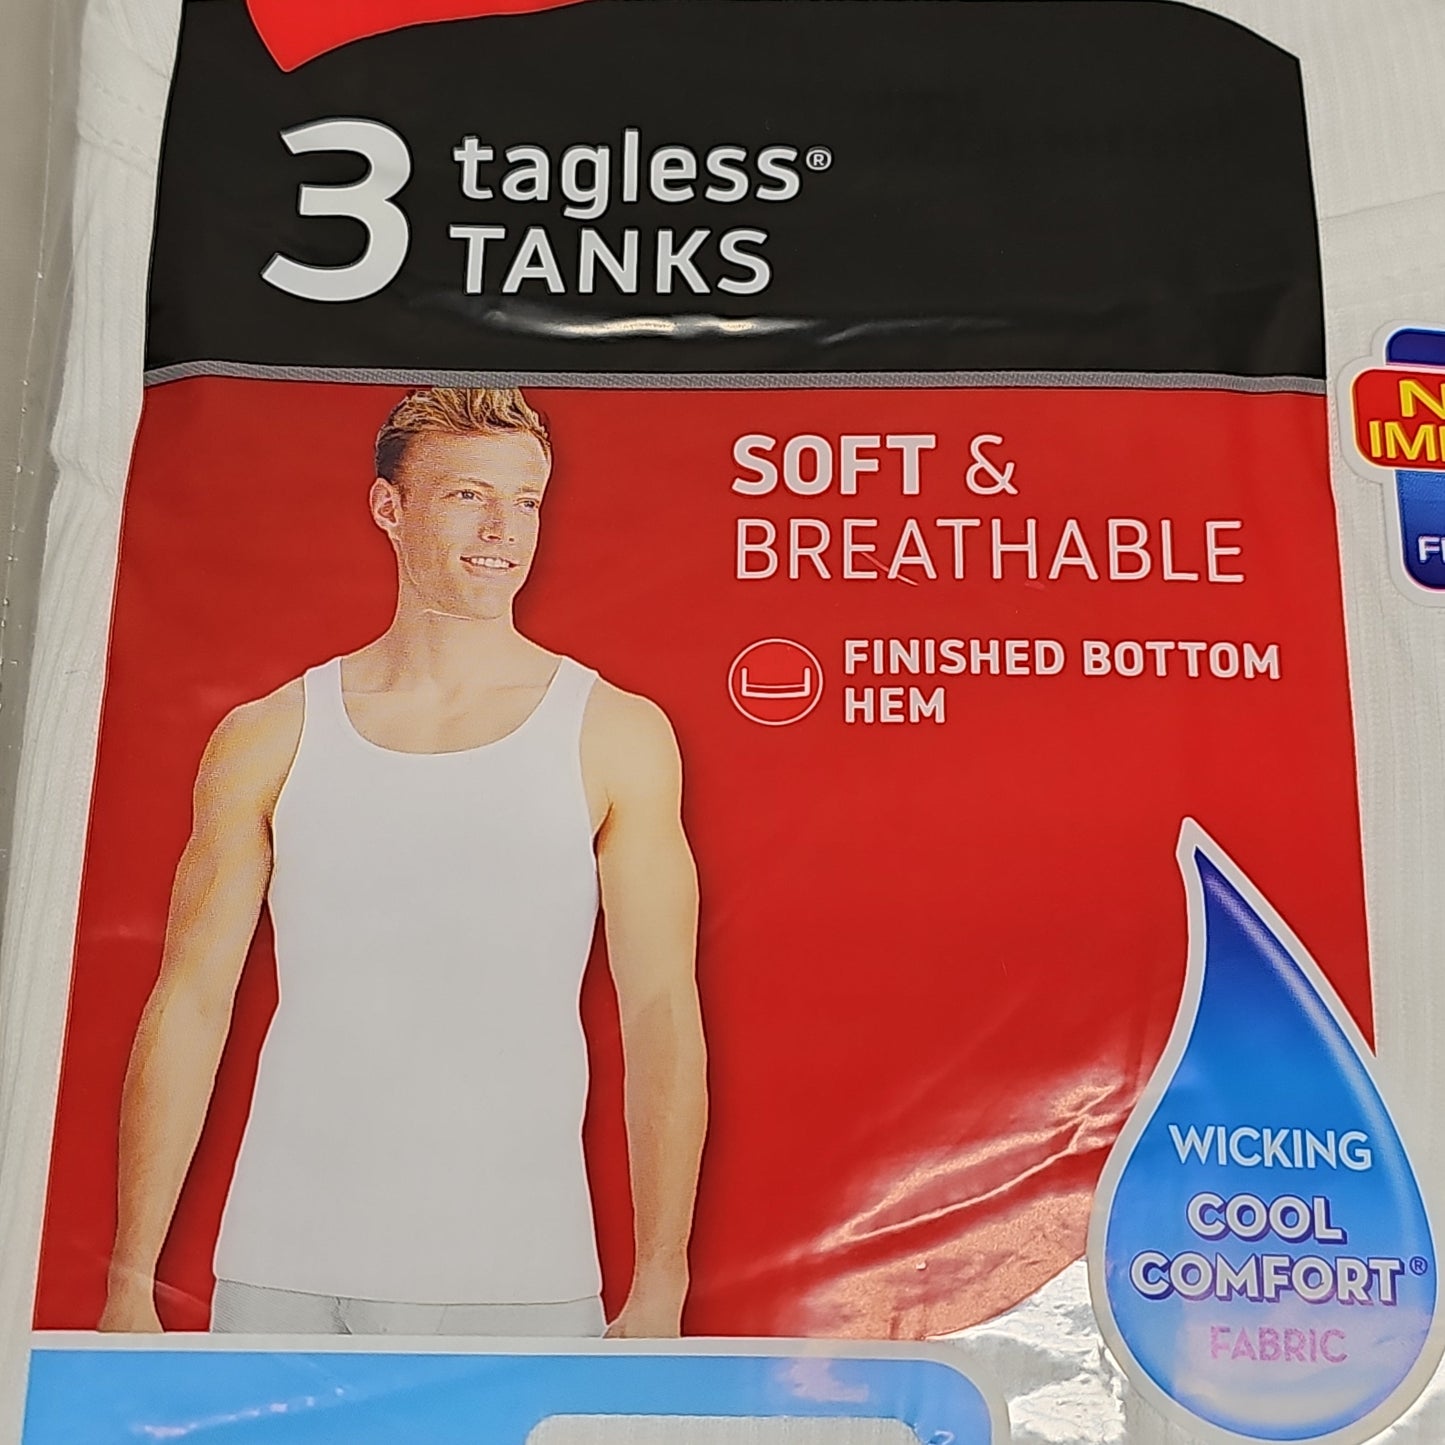 HANES Tagless Tanks Men's Sz S 34-36" Pack of 12 White 372 (New)